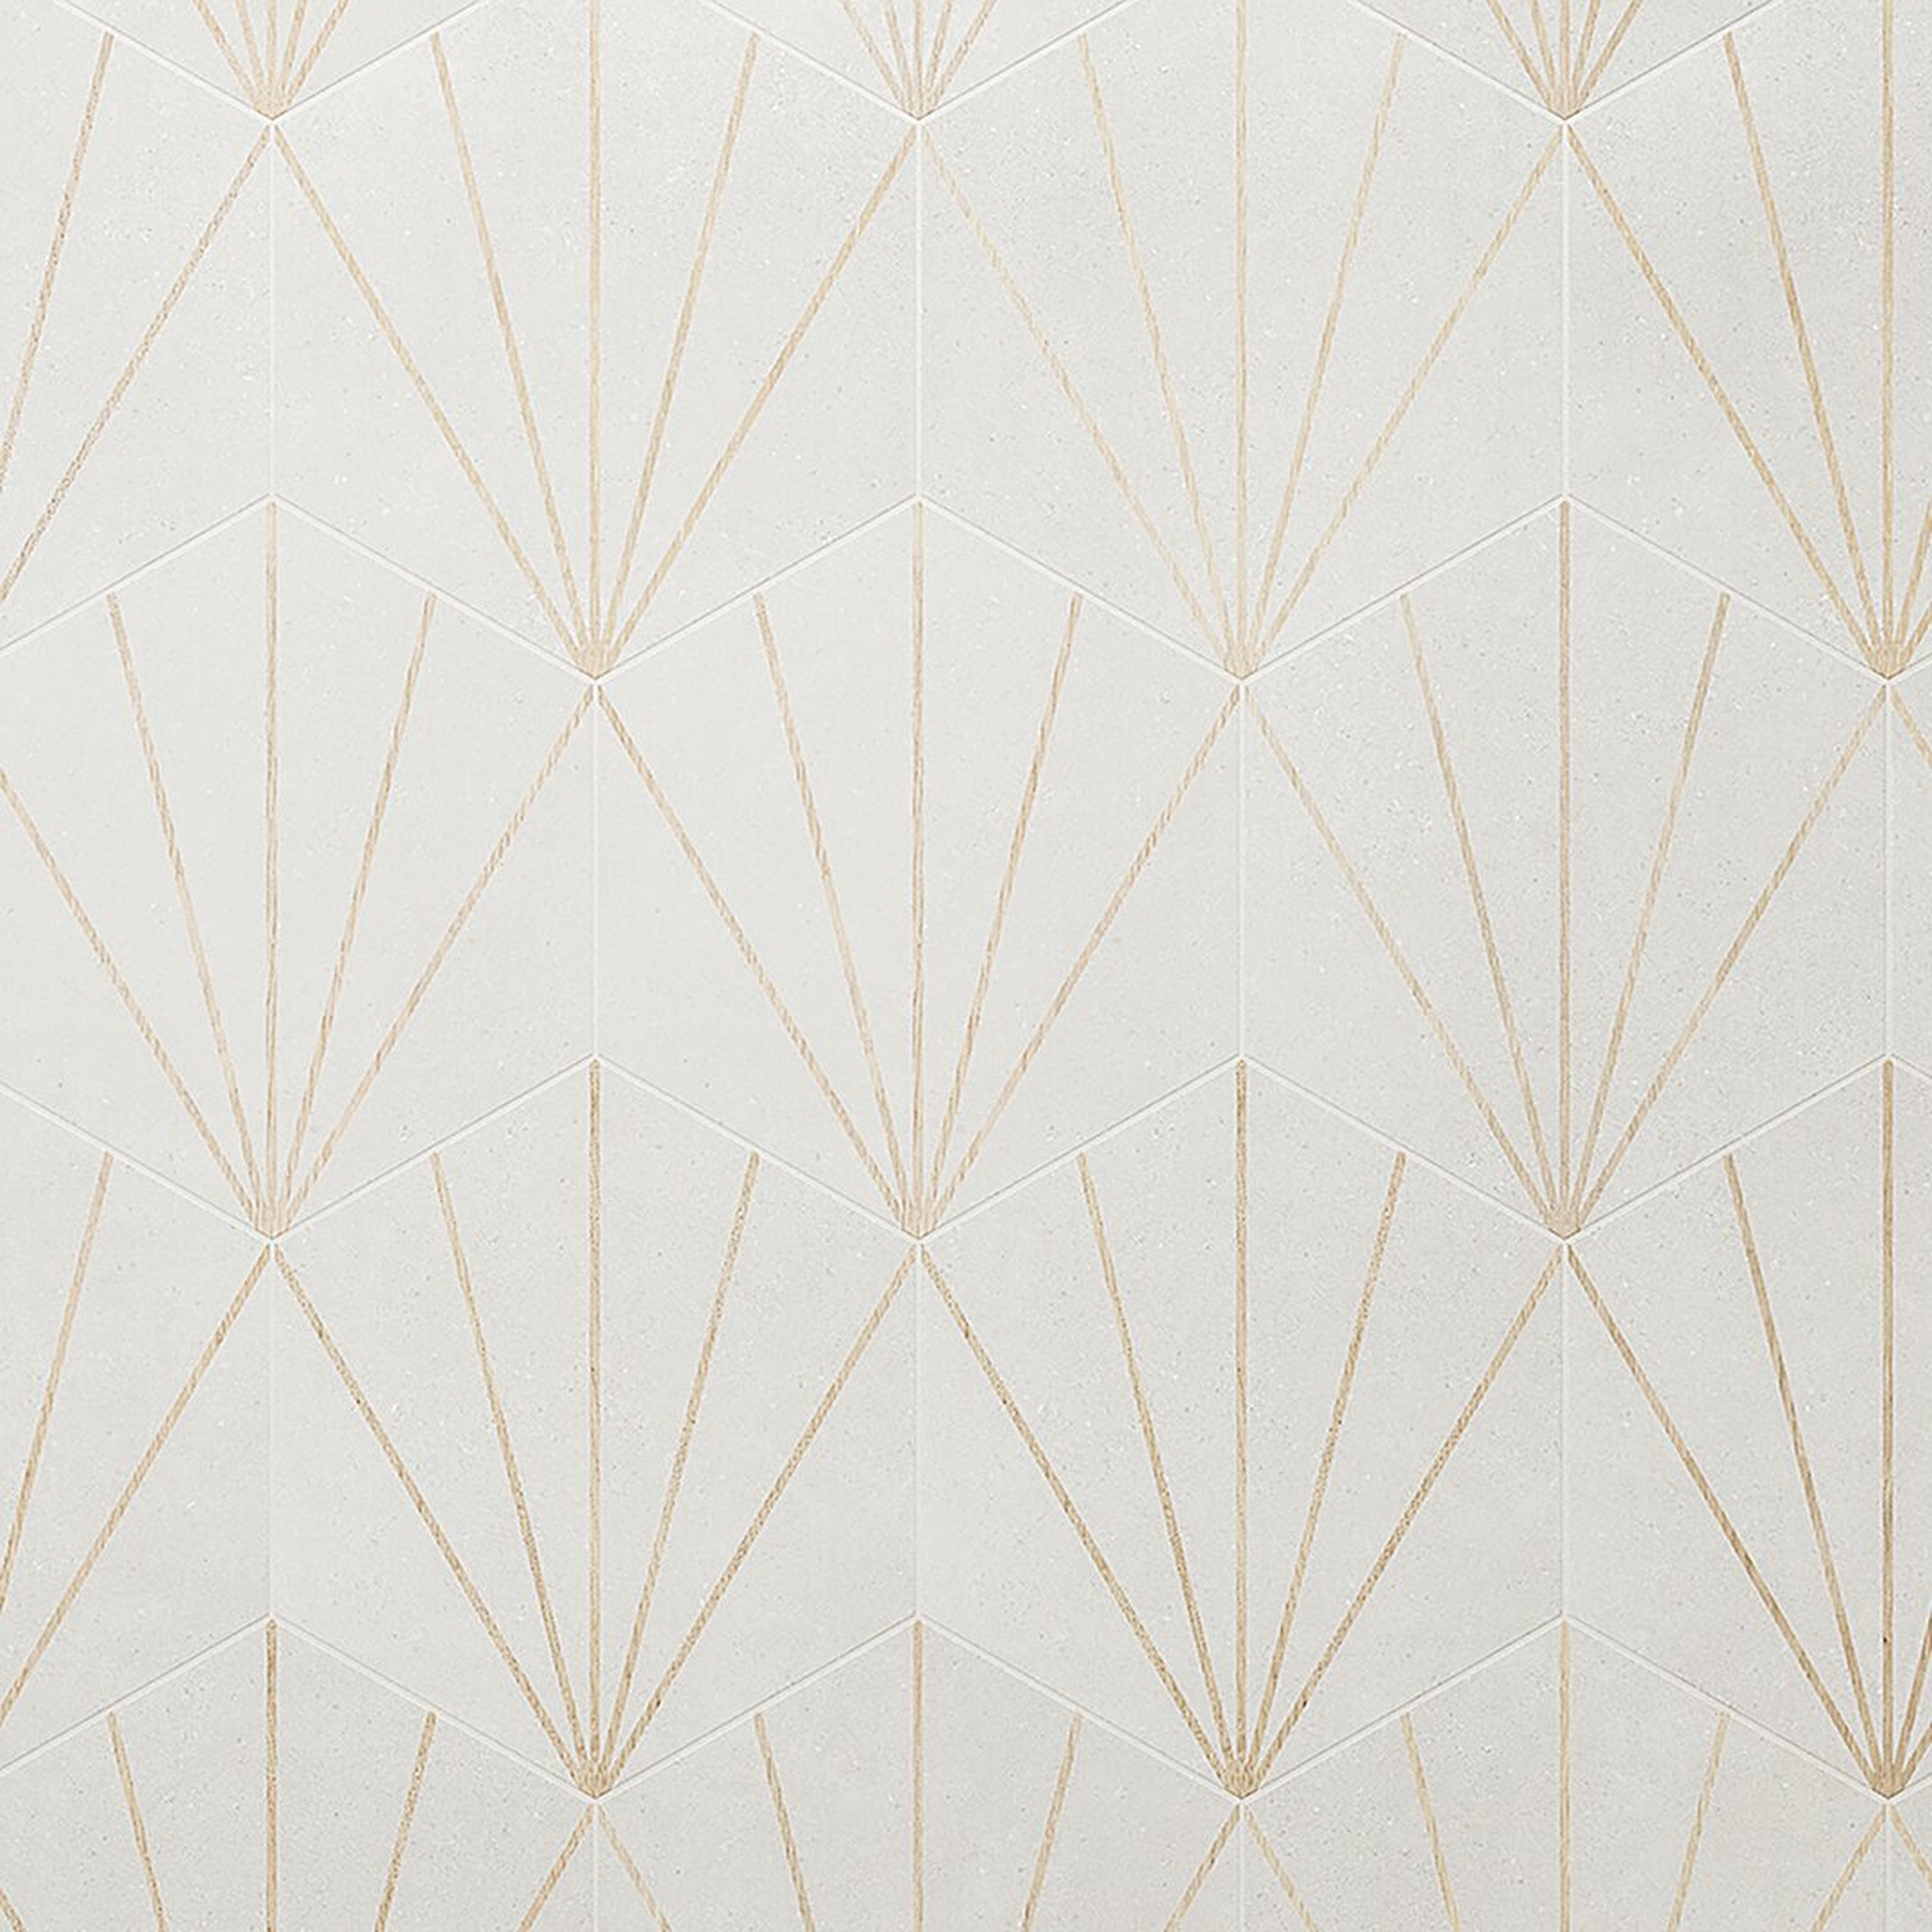 Bond Tile Klyda Beams 13"" x 14.5"" Porcelain Wall & Floor Tile - Perigold